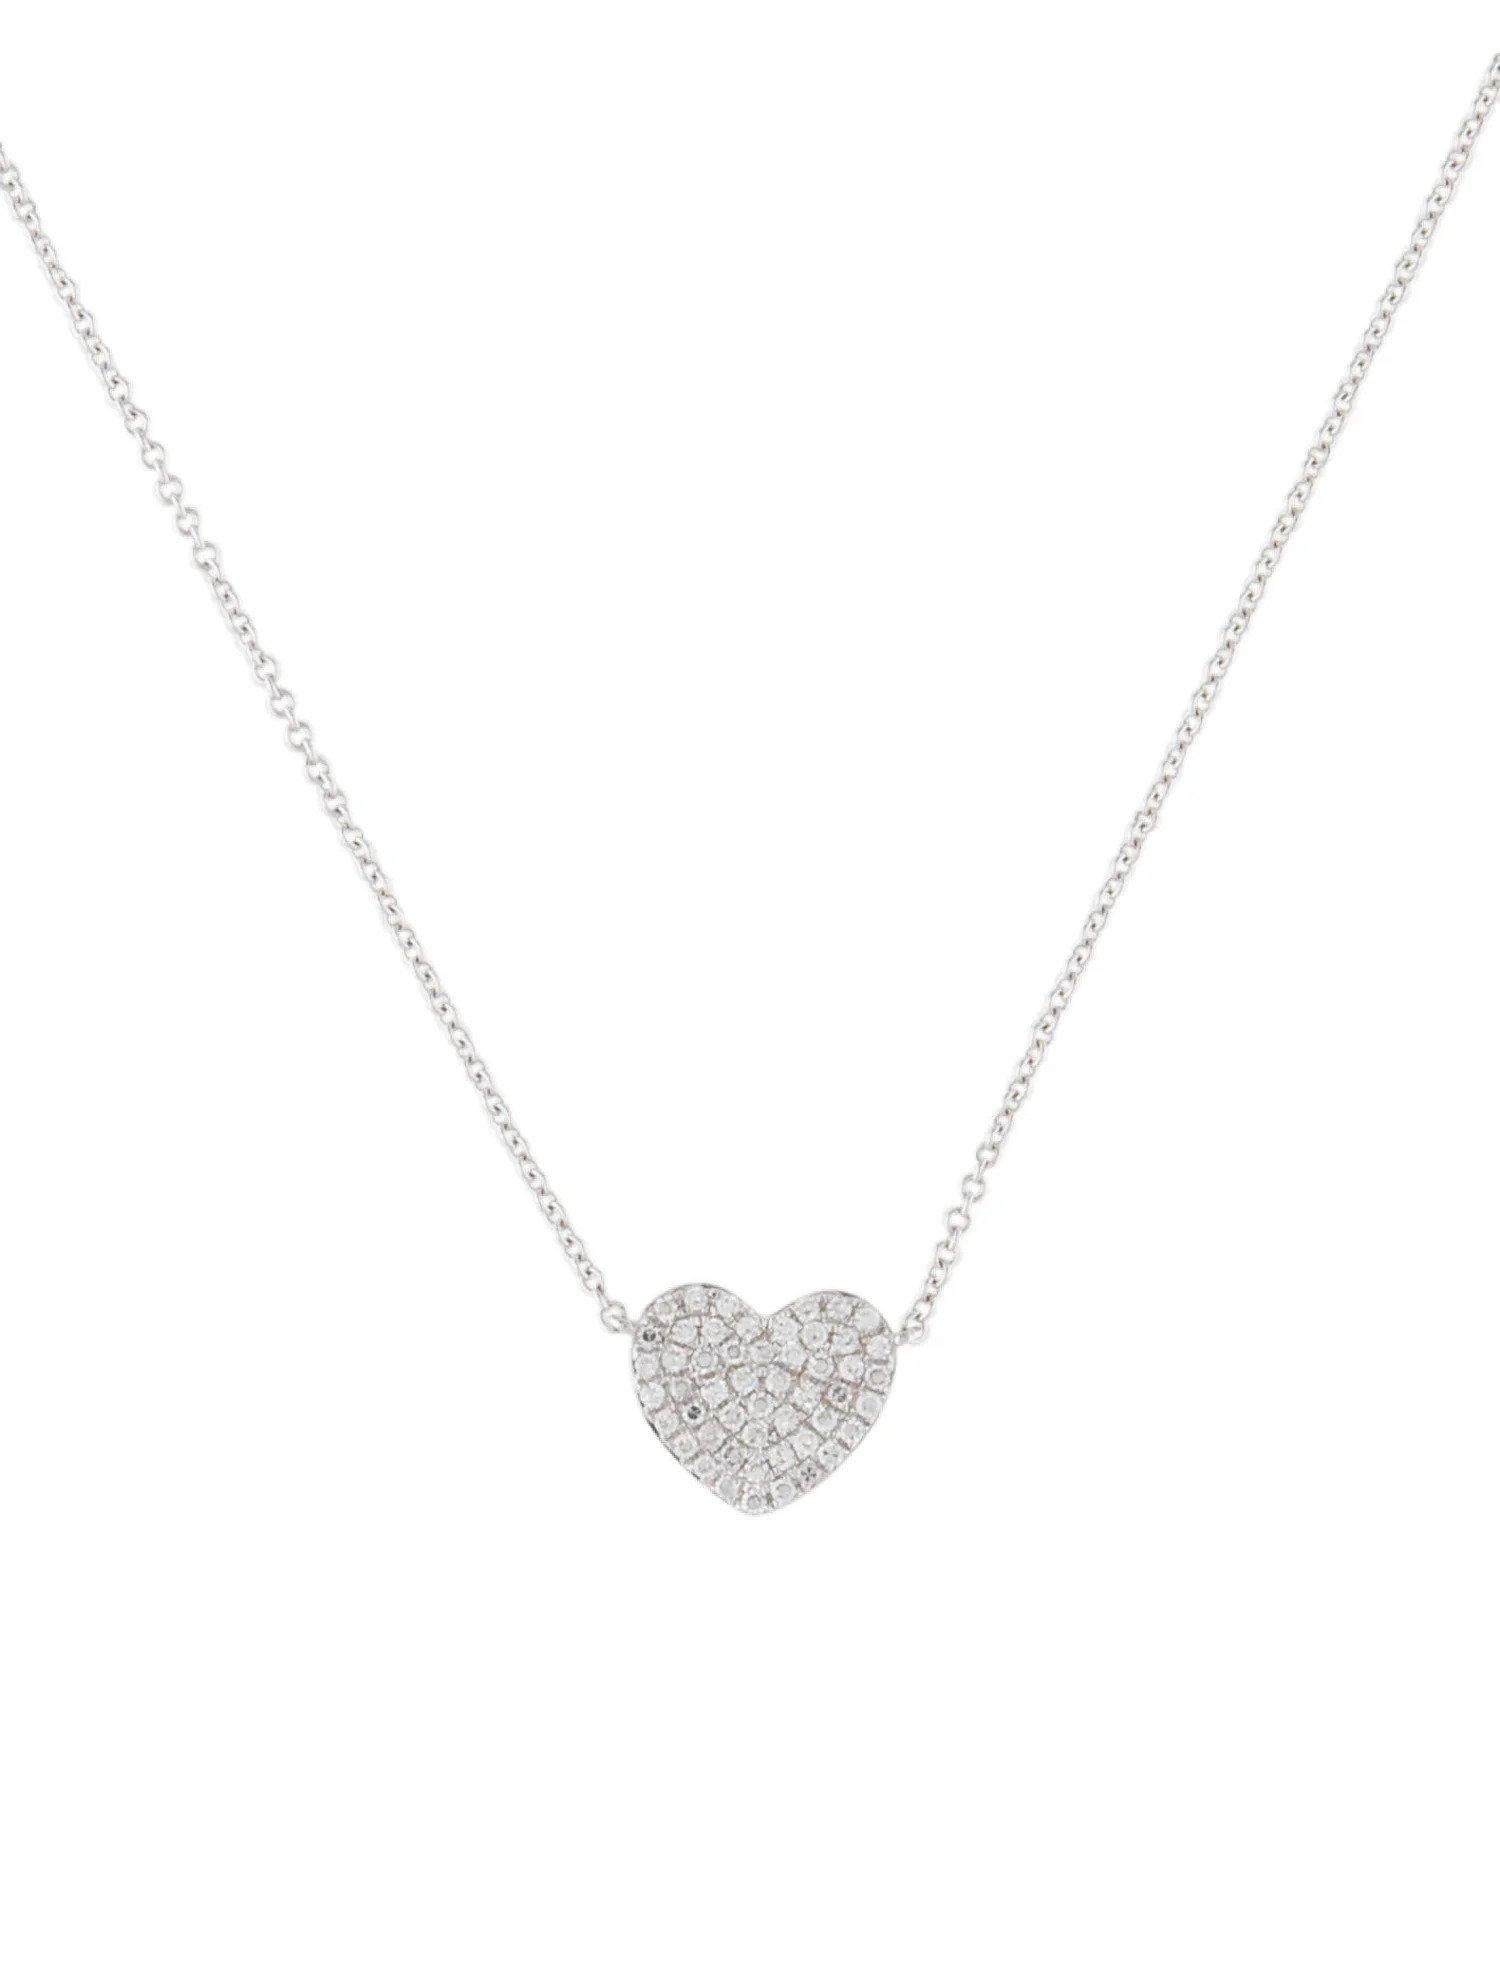 Round Cut 0.16 Carat Diamond Heart White Gold Pendant For Sale